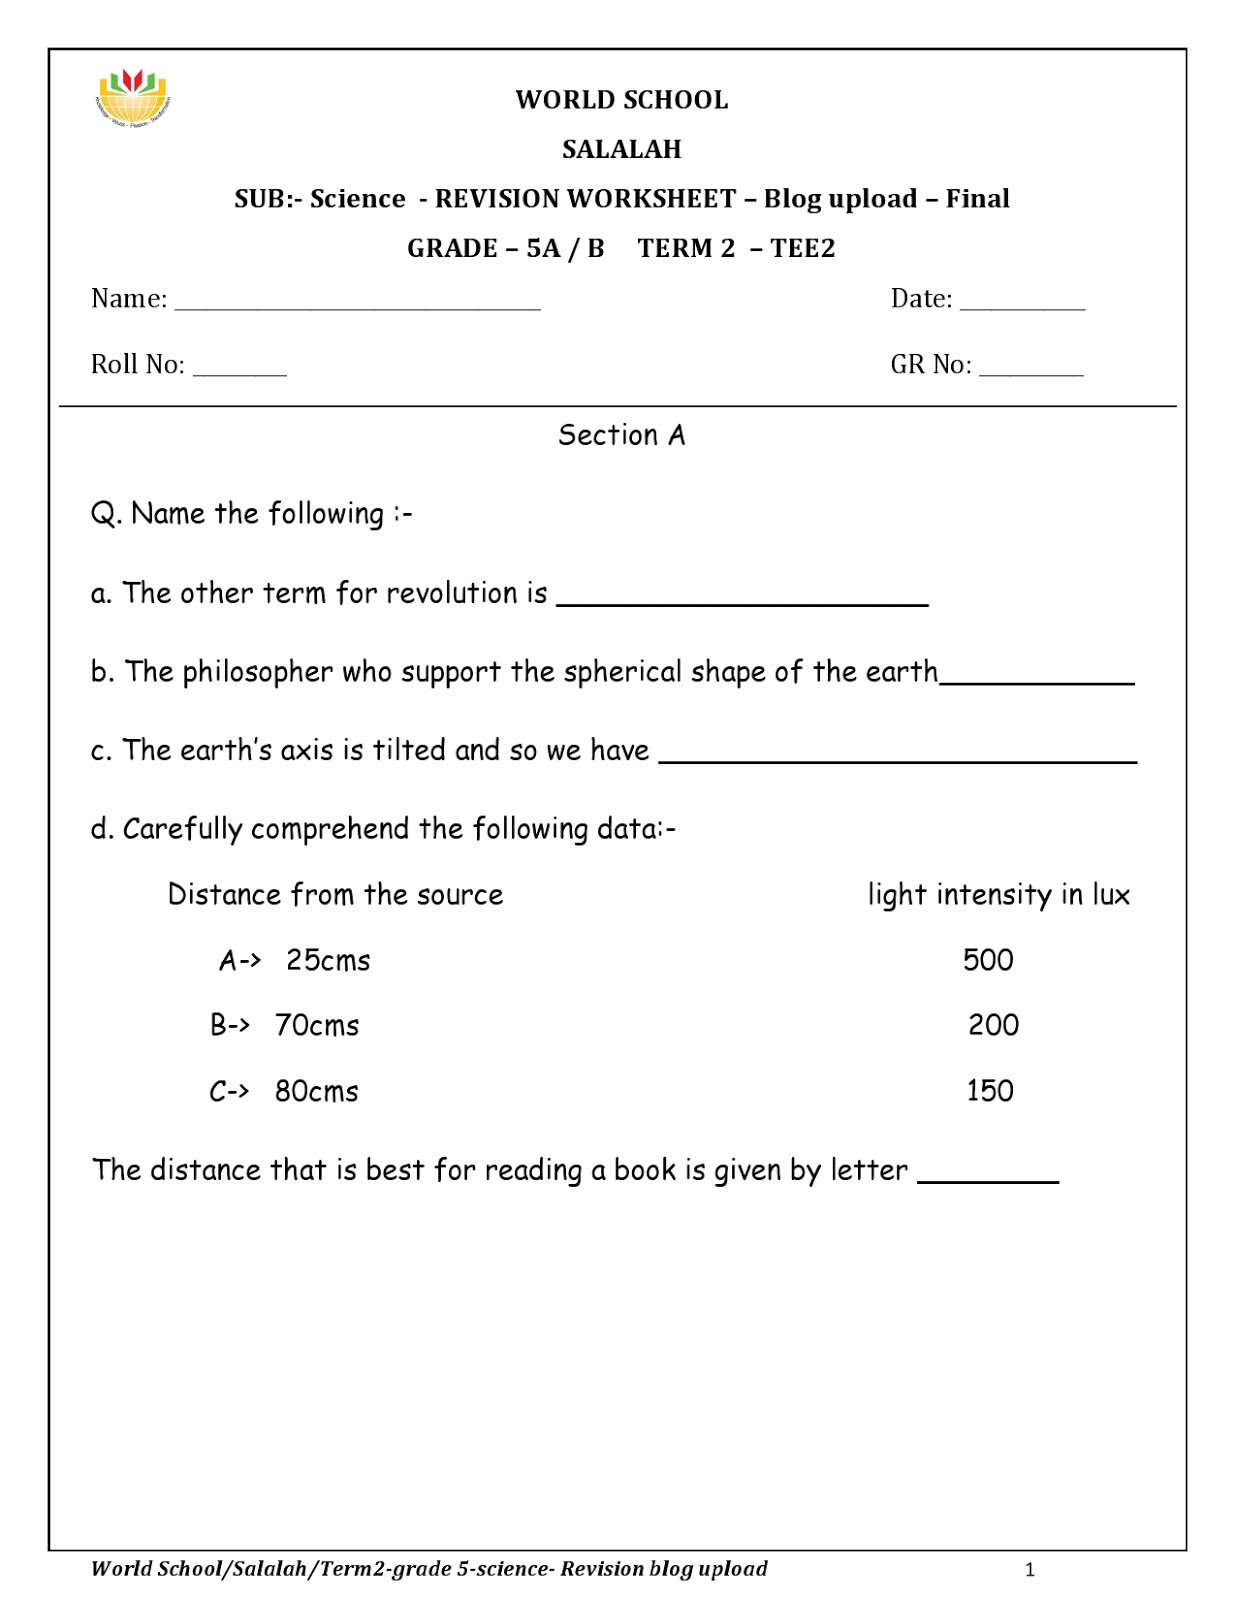 birla world school oman revision worksheets for grade 5 as on 13 05 2019